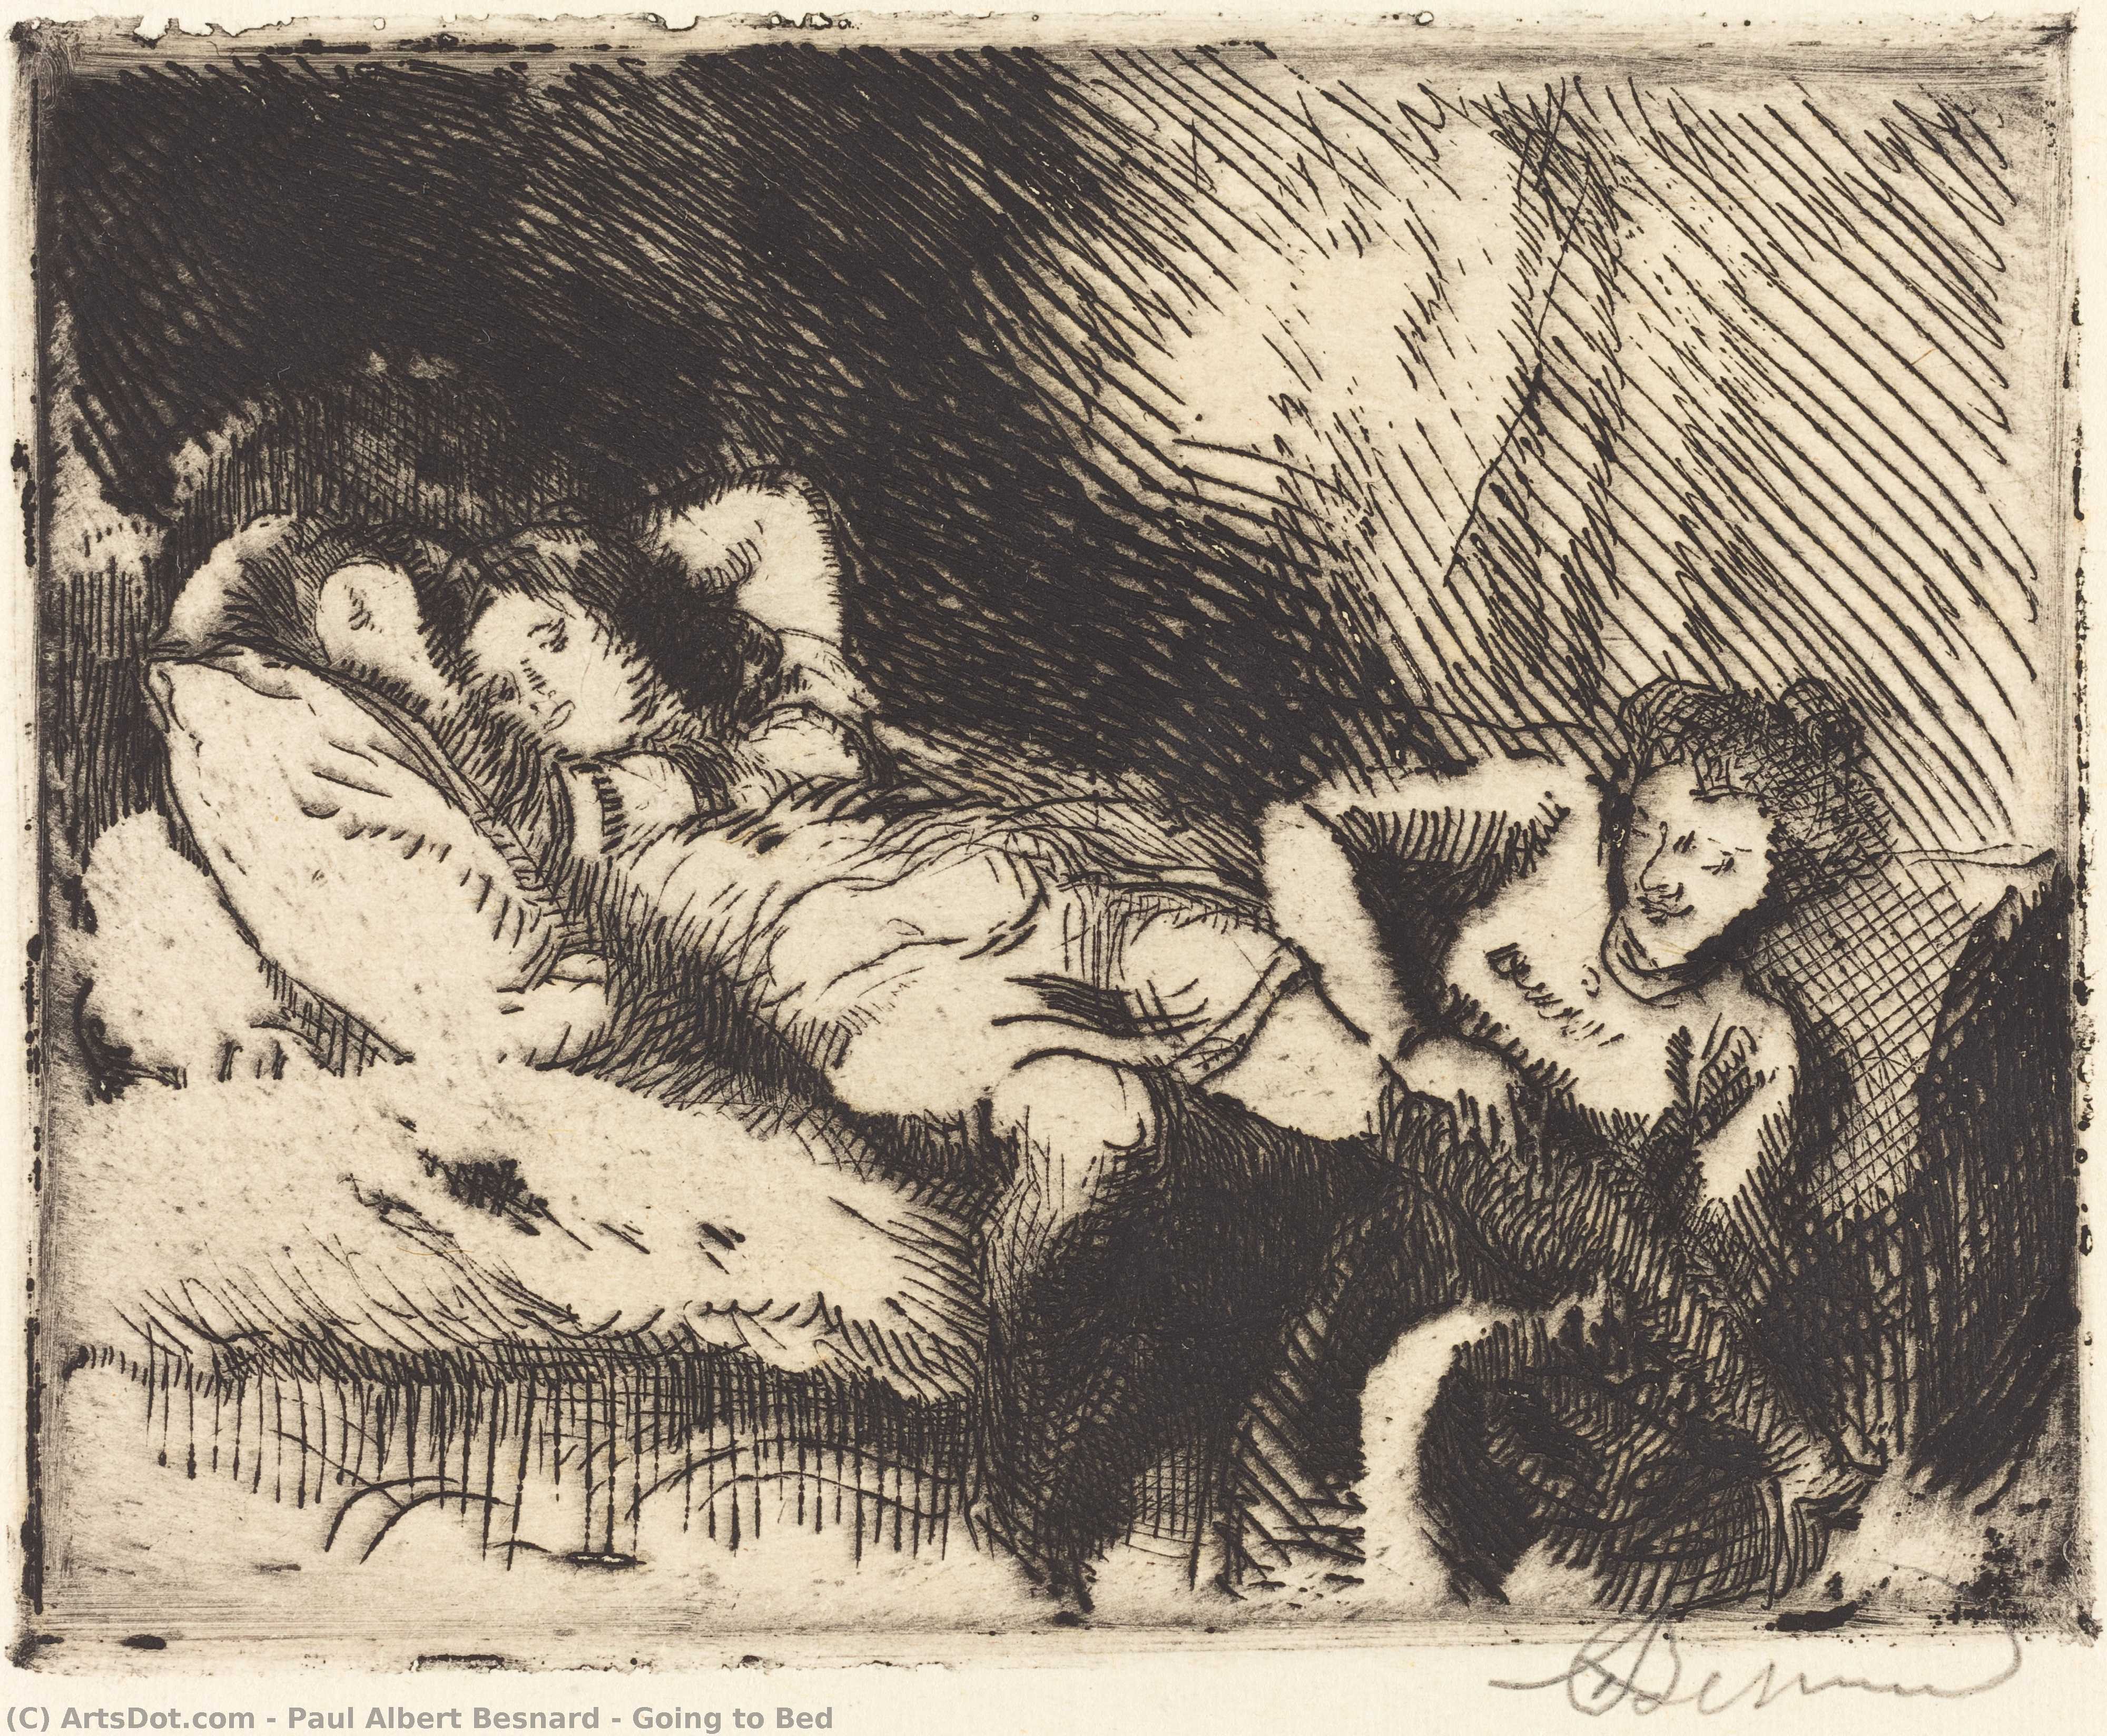  Museum Art Reproductions Going to Bed, 1913 by Paul Albert Besnard (1849-1934, France) | ArtsDot.com